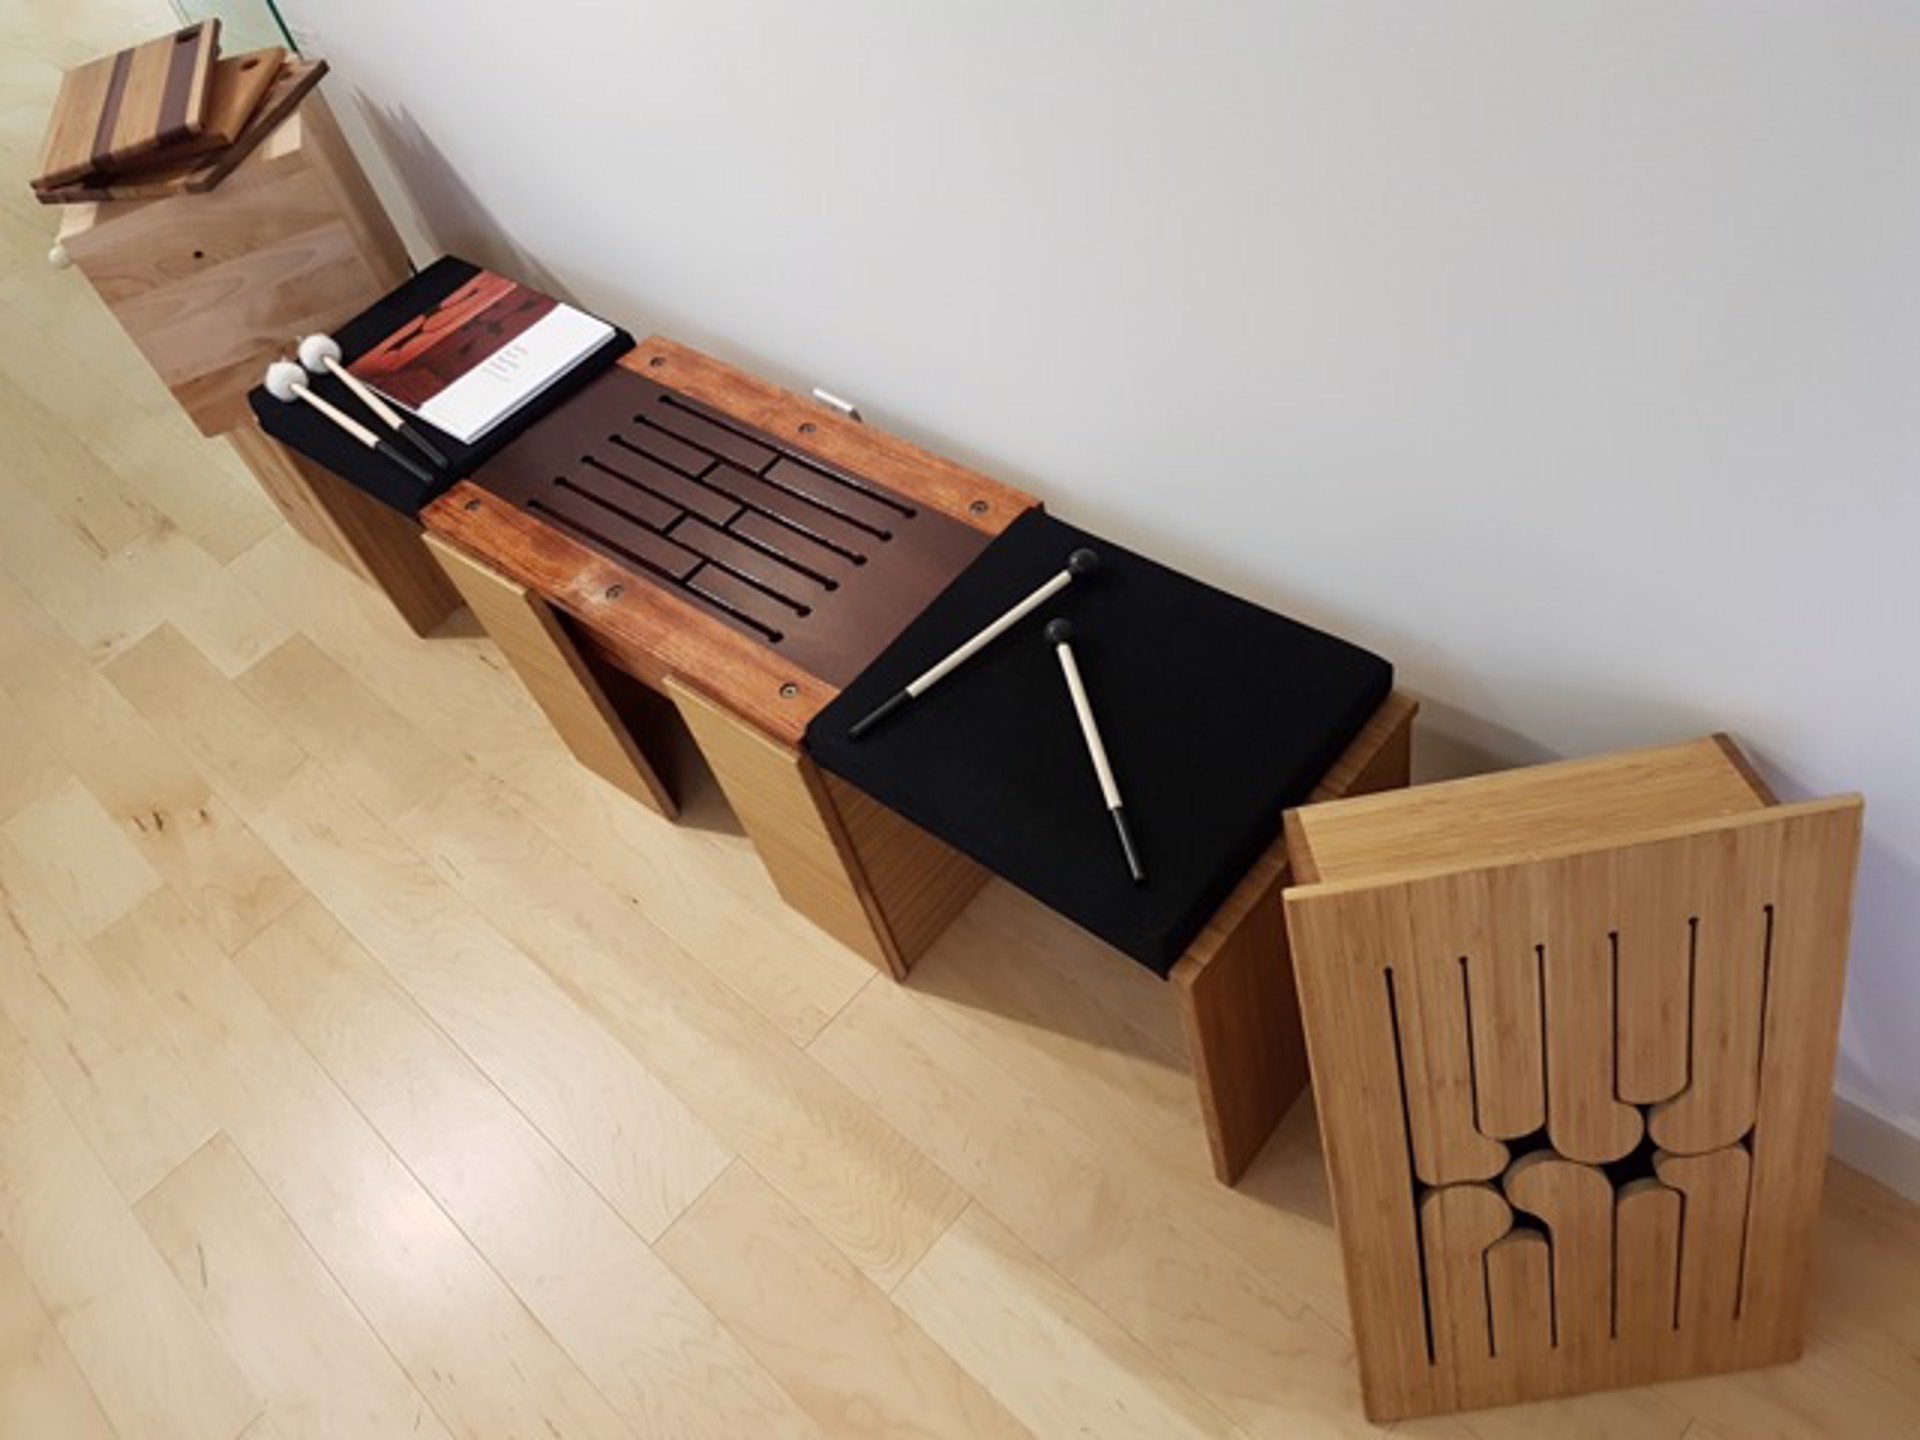 Ubuntu: Sound Resonating Furniture by Benjamin McLaughlin